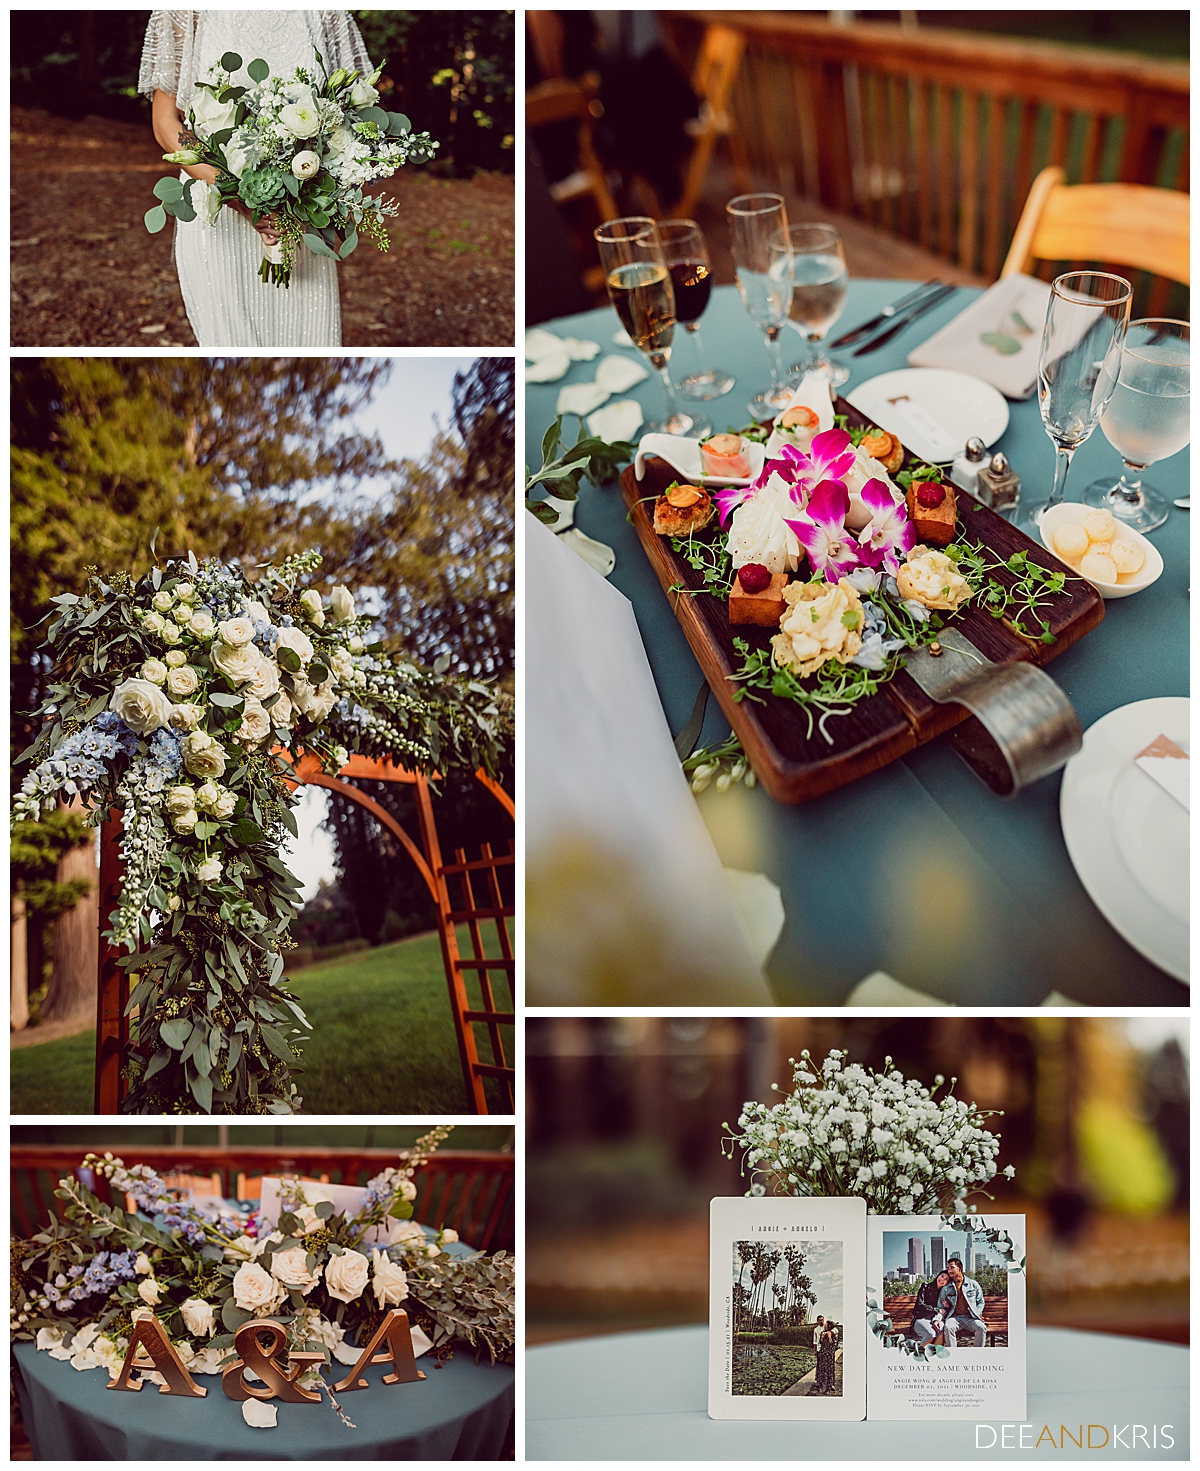 Five images of various floral details.